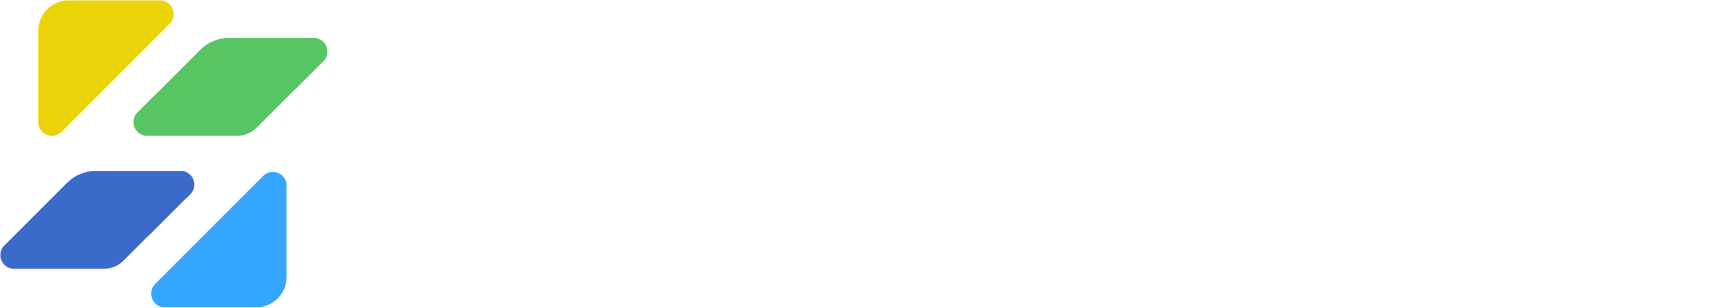 Harrison logo